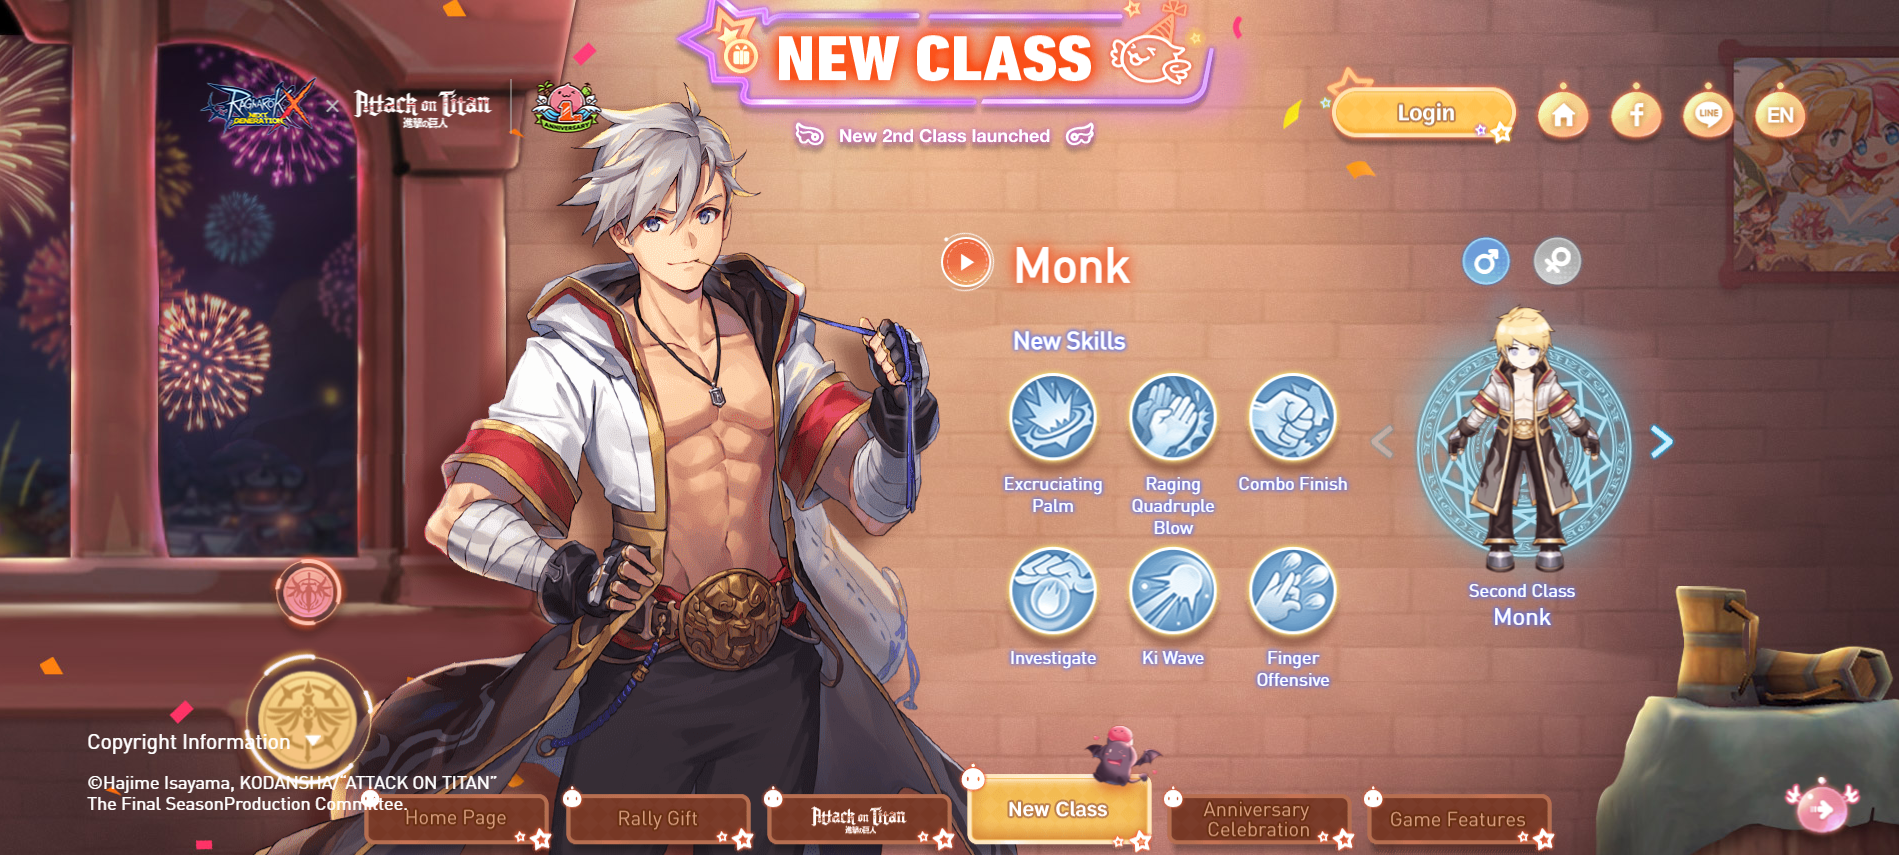 ROX New Class Monk